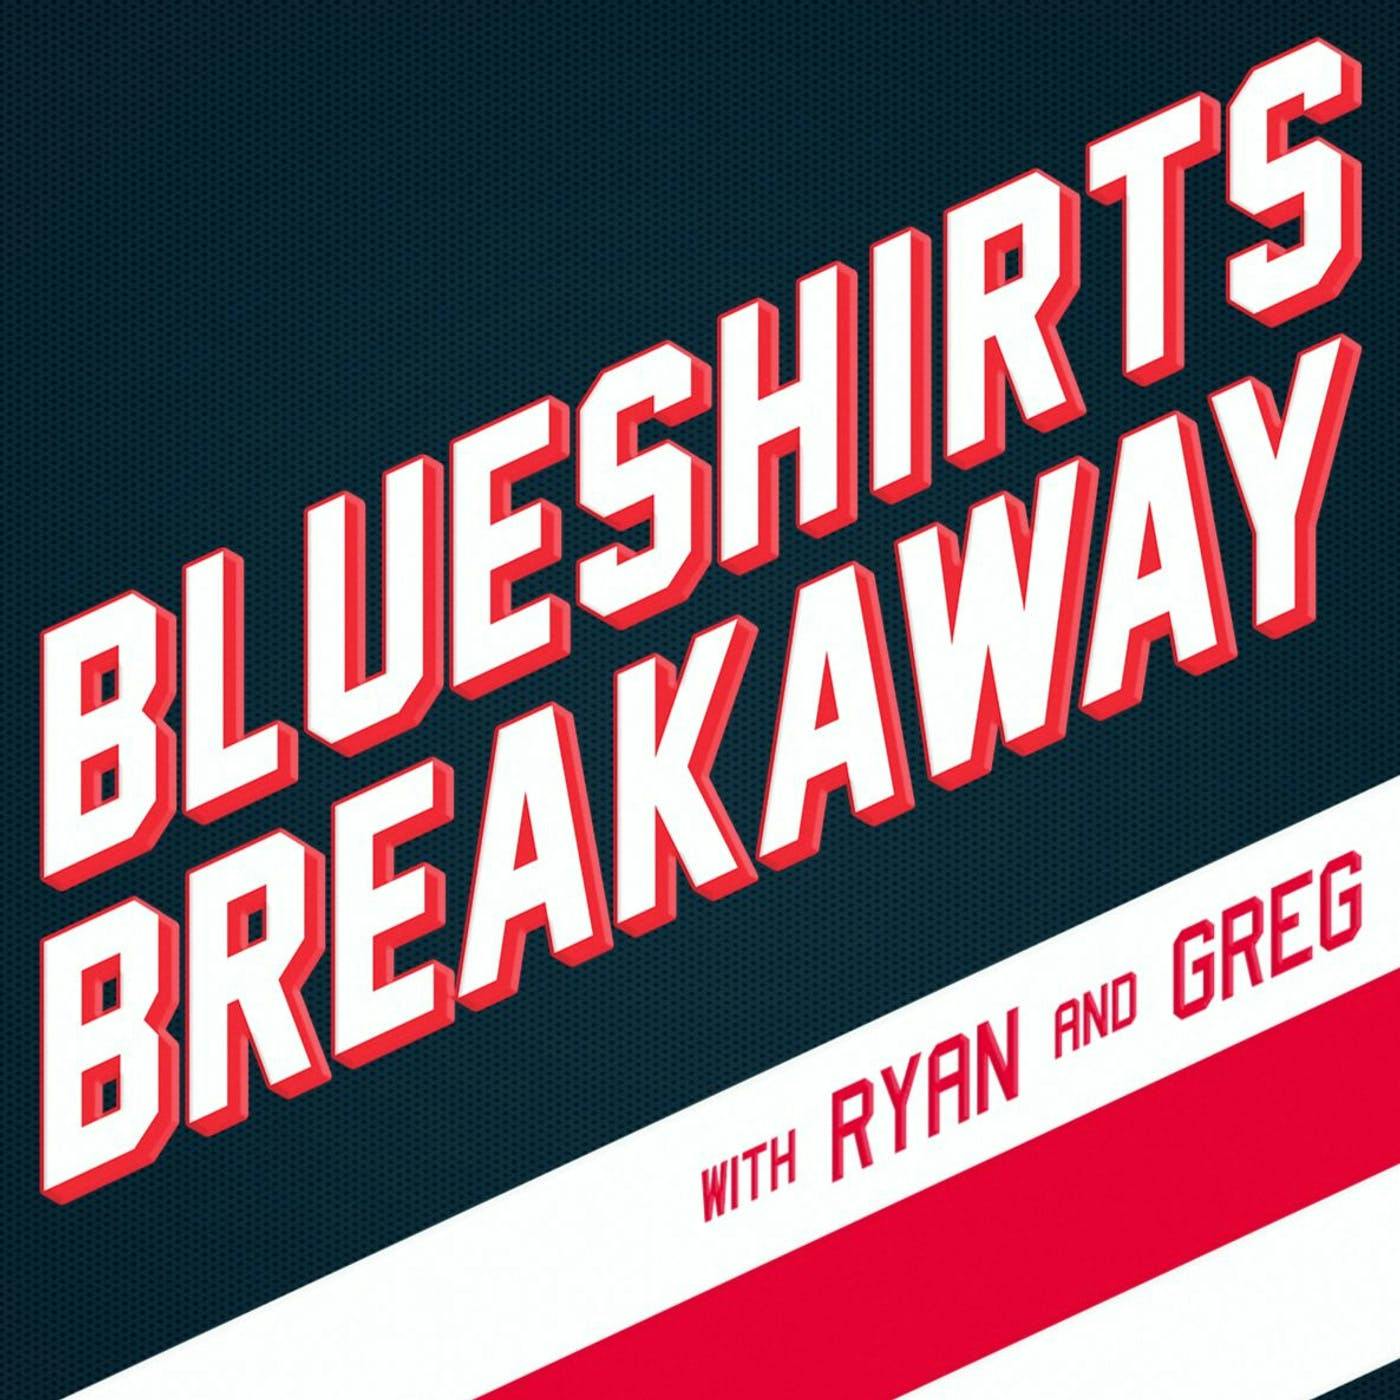 Blueshirts Breakaway EP 102 - End Of The AV Era?